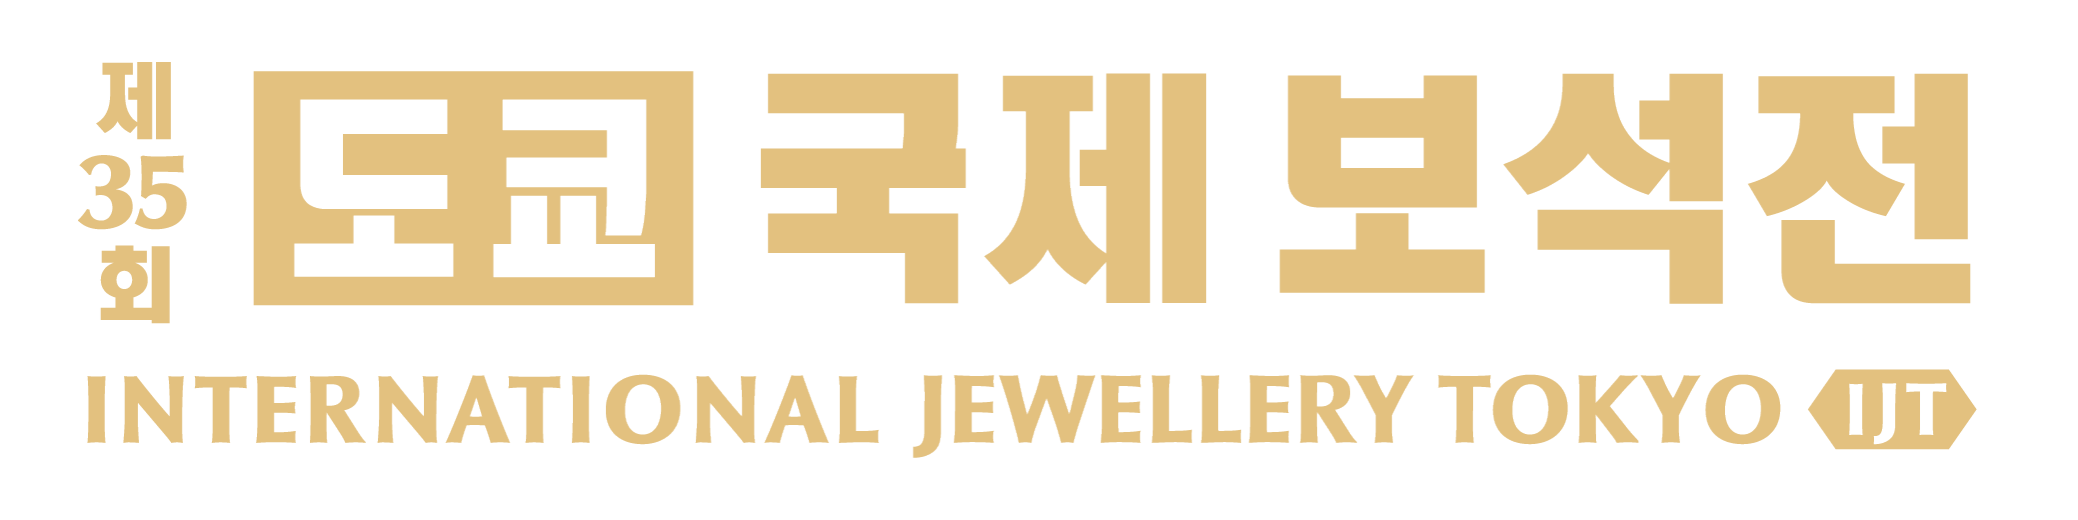 International Jewellery Tokyo 국제 도쿄 보석전